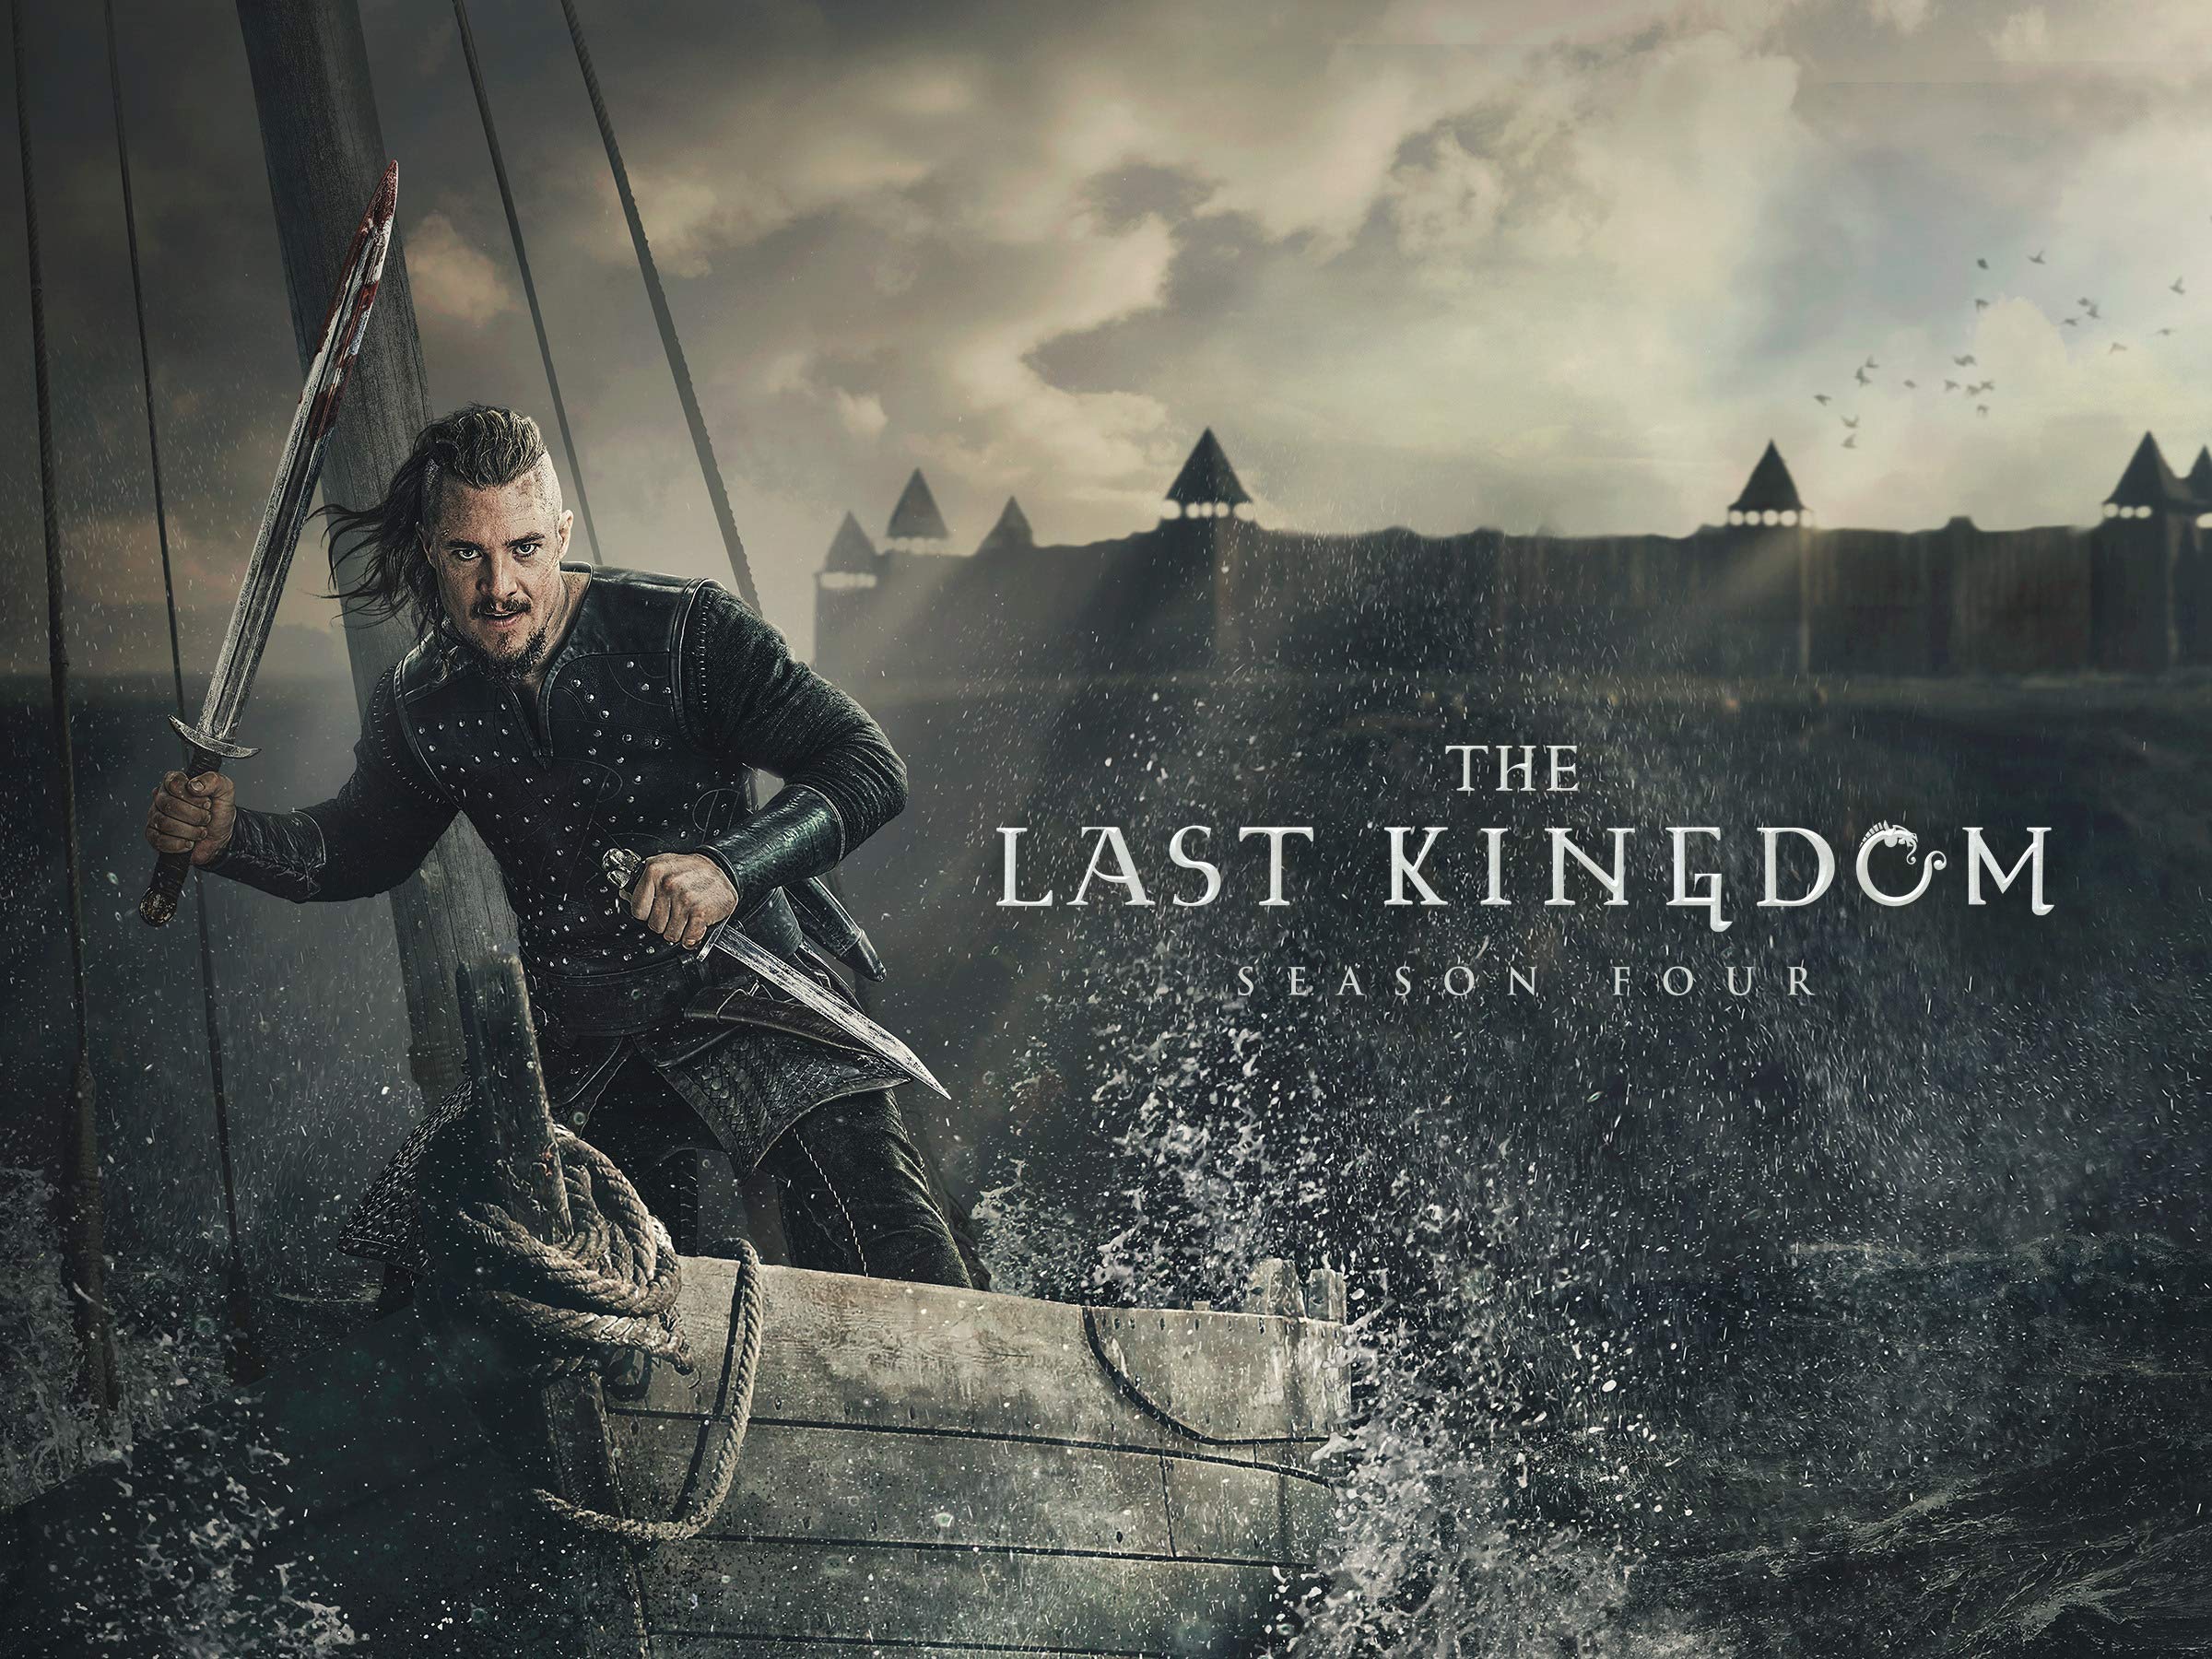 The Last Kingdom Season 5 Wallpapers